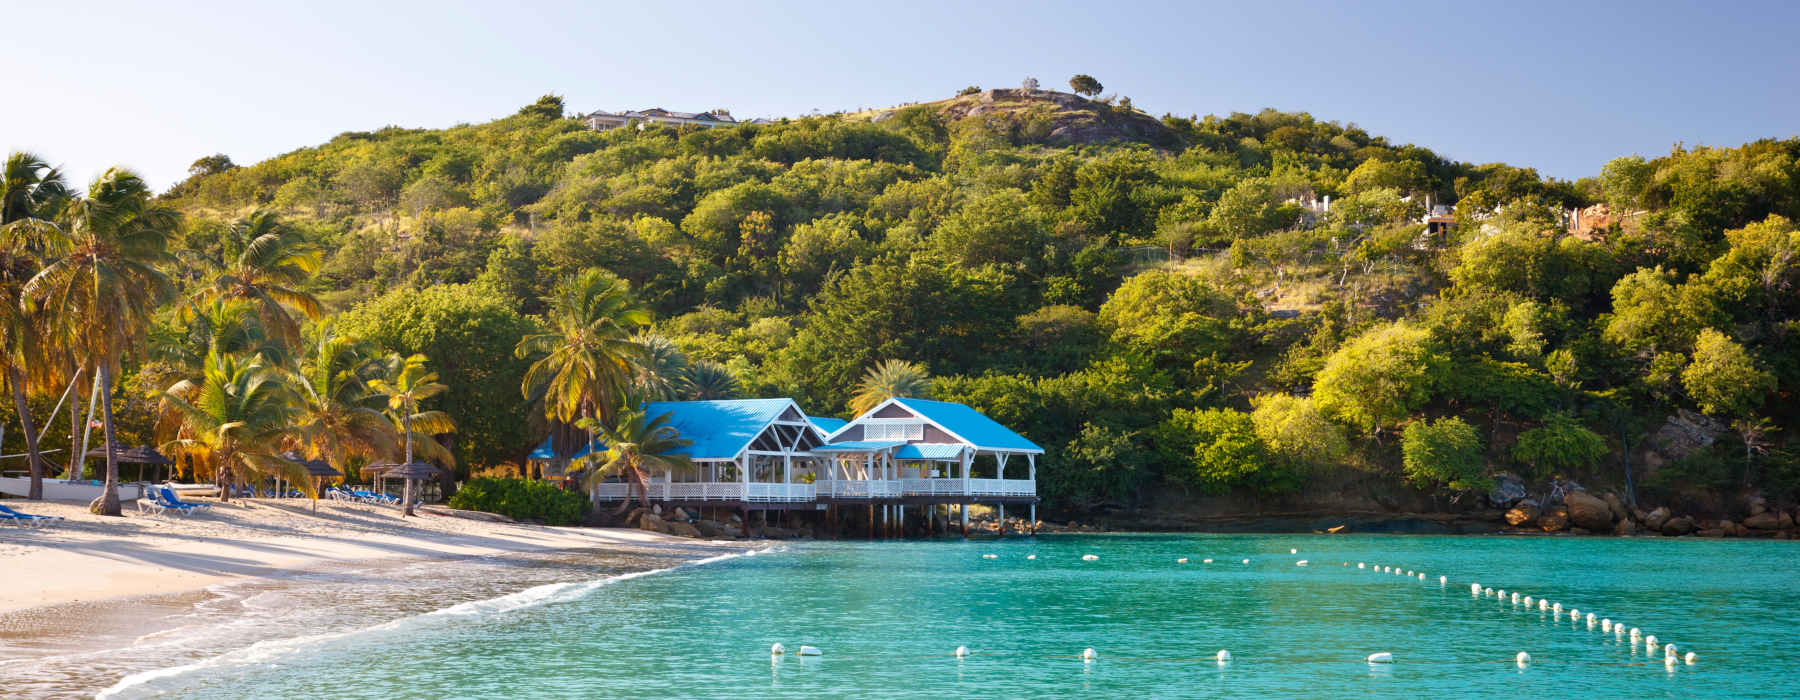 All our Antigua and Barbuda<br class="hidden-md hidden-lg" /> Honeymoons